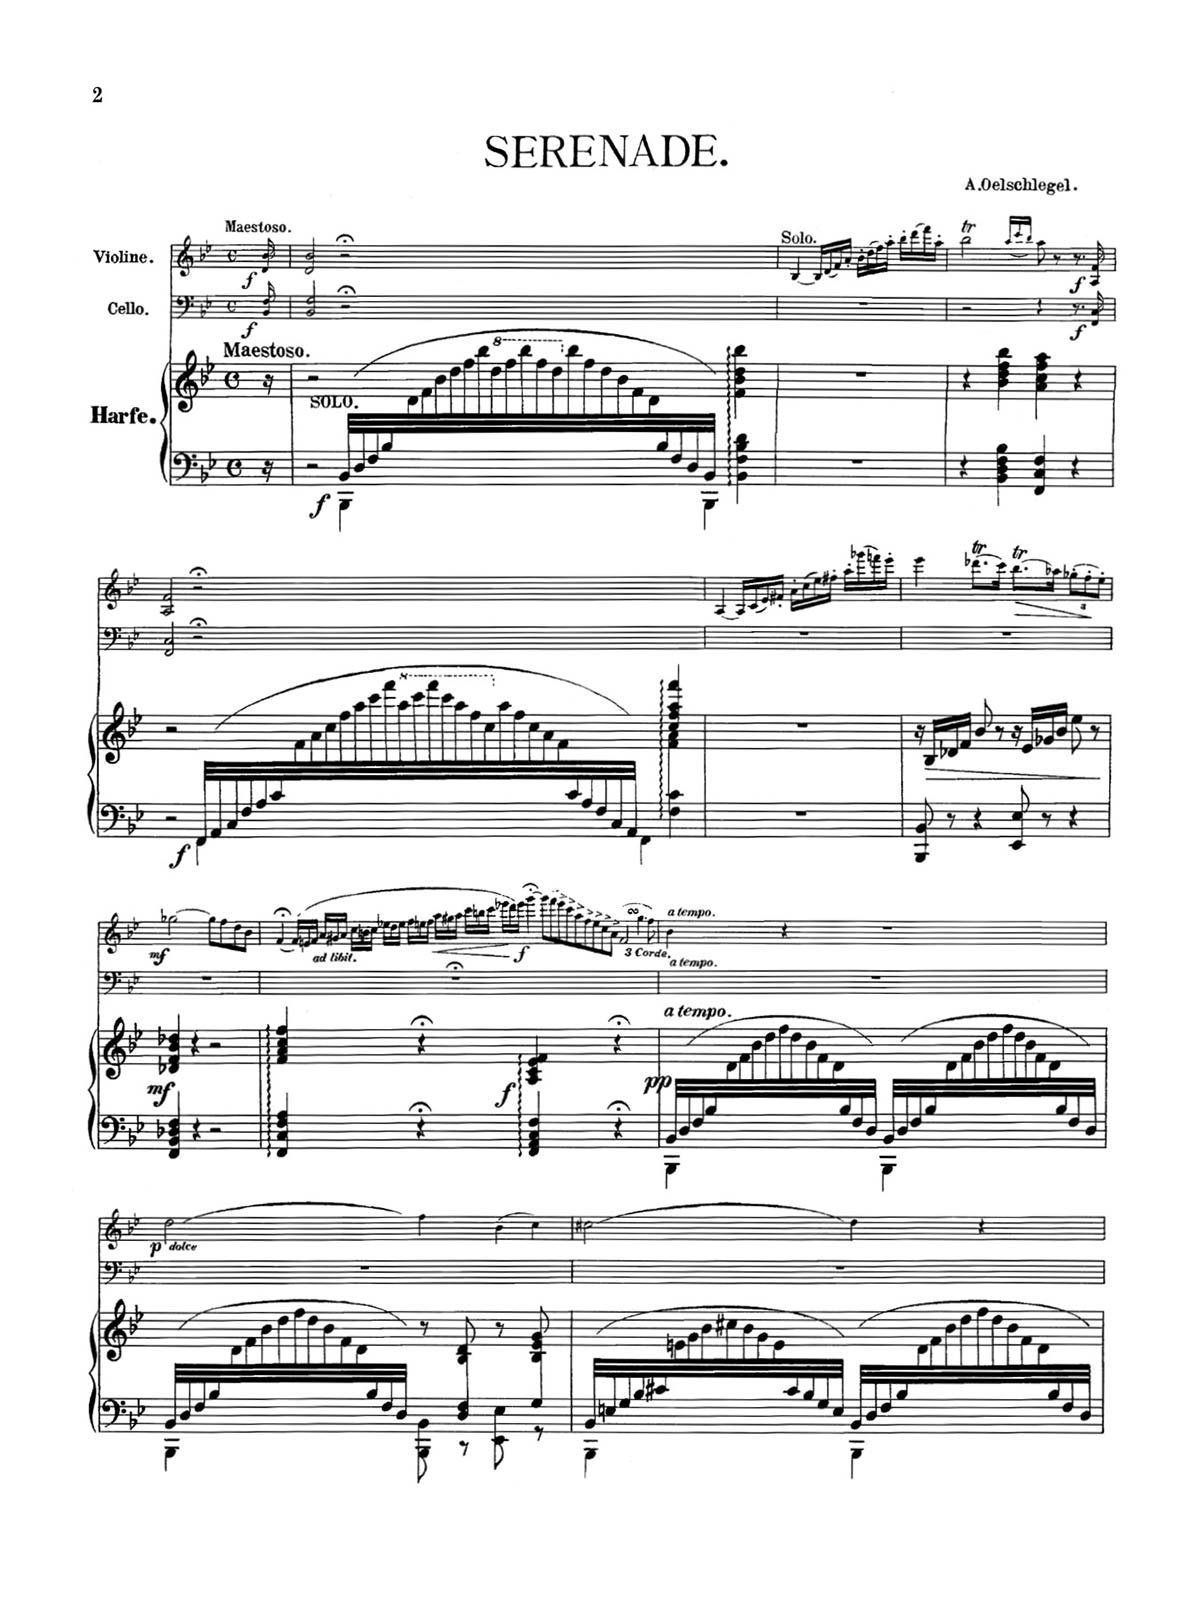 Oelschlegel Harfen Serenade Trio 1